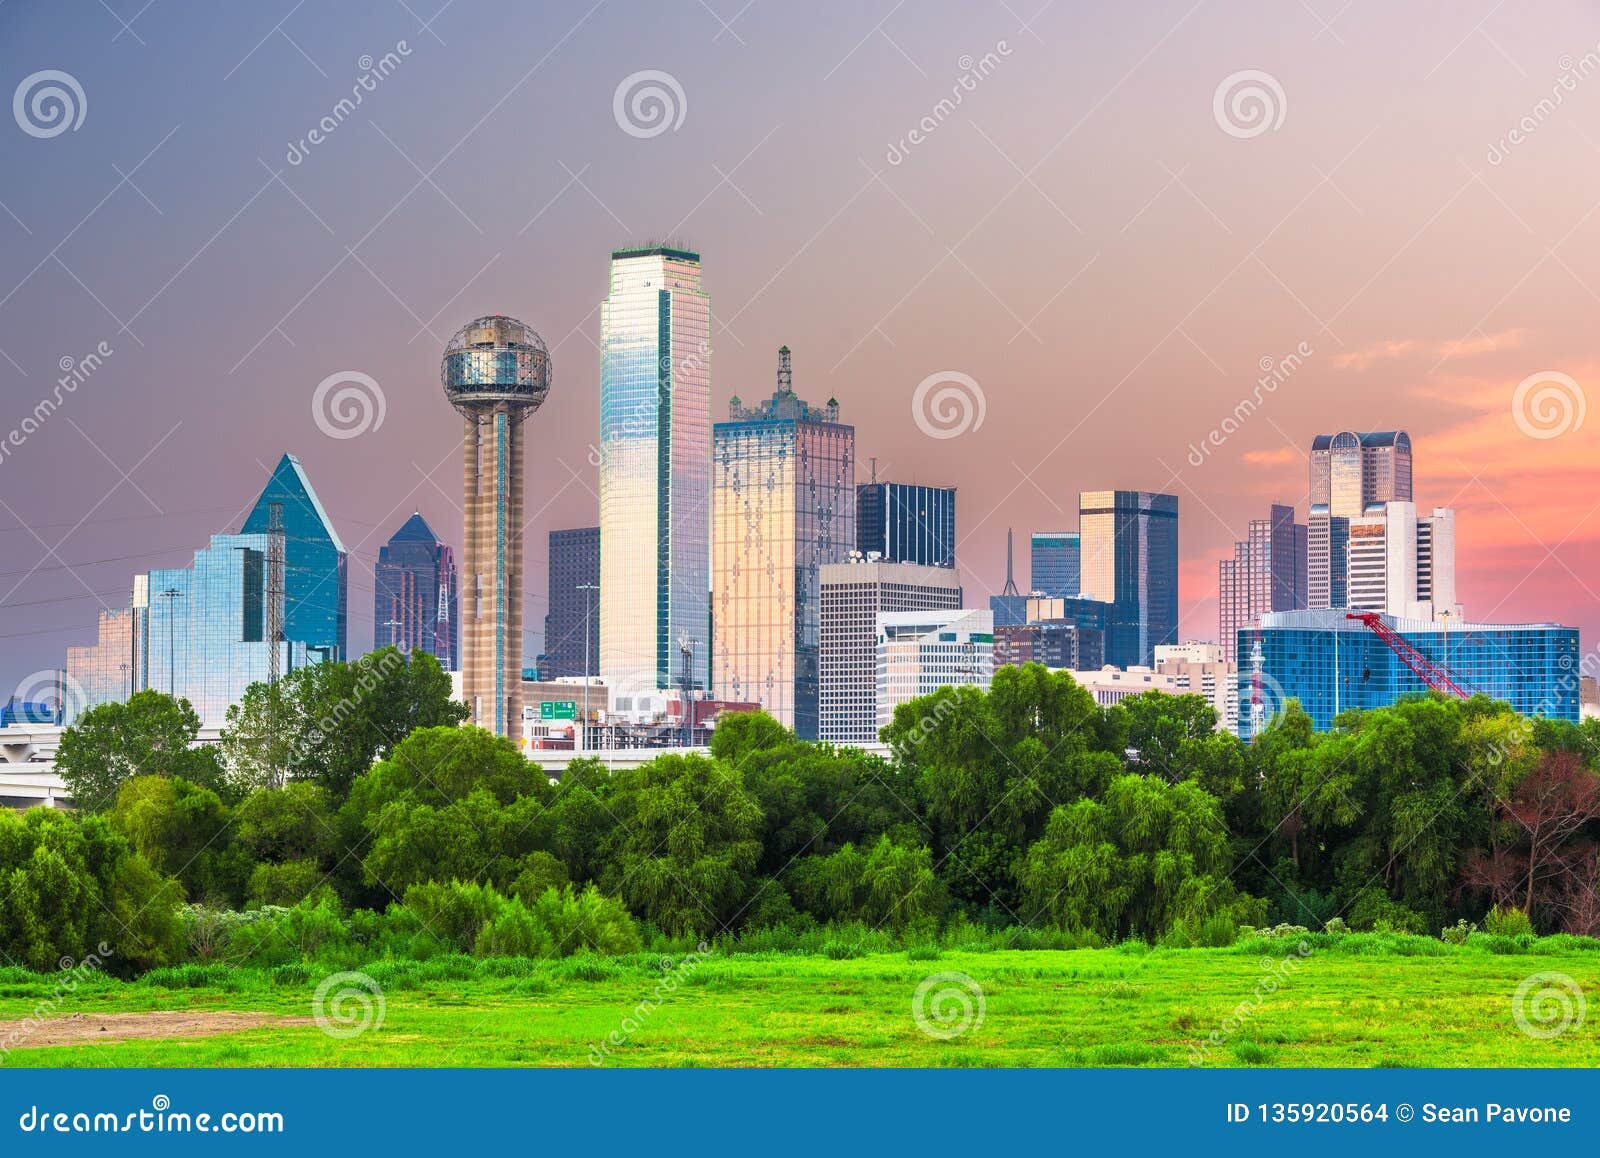 dallas, texas, usa skyline